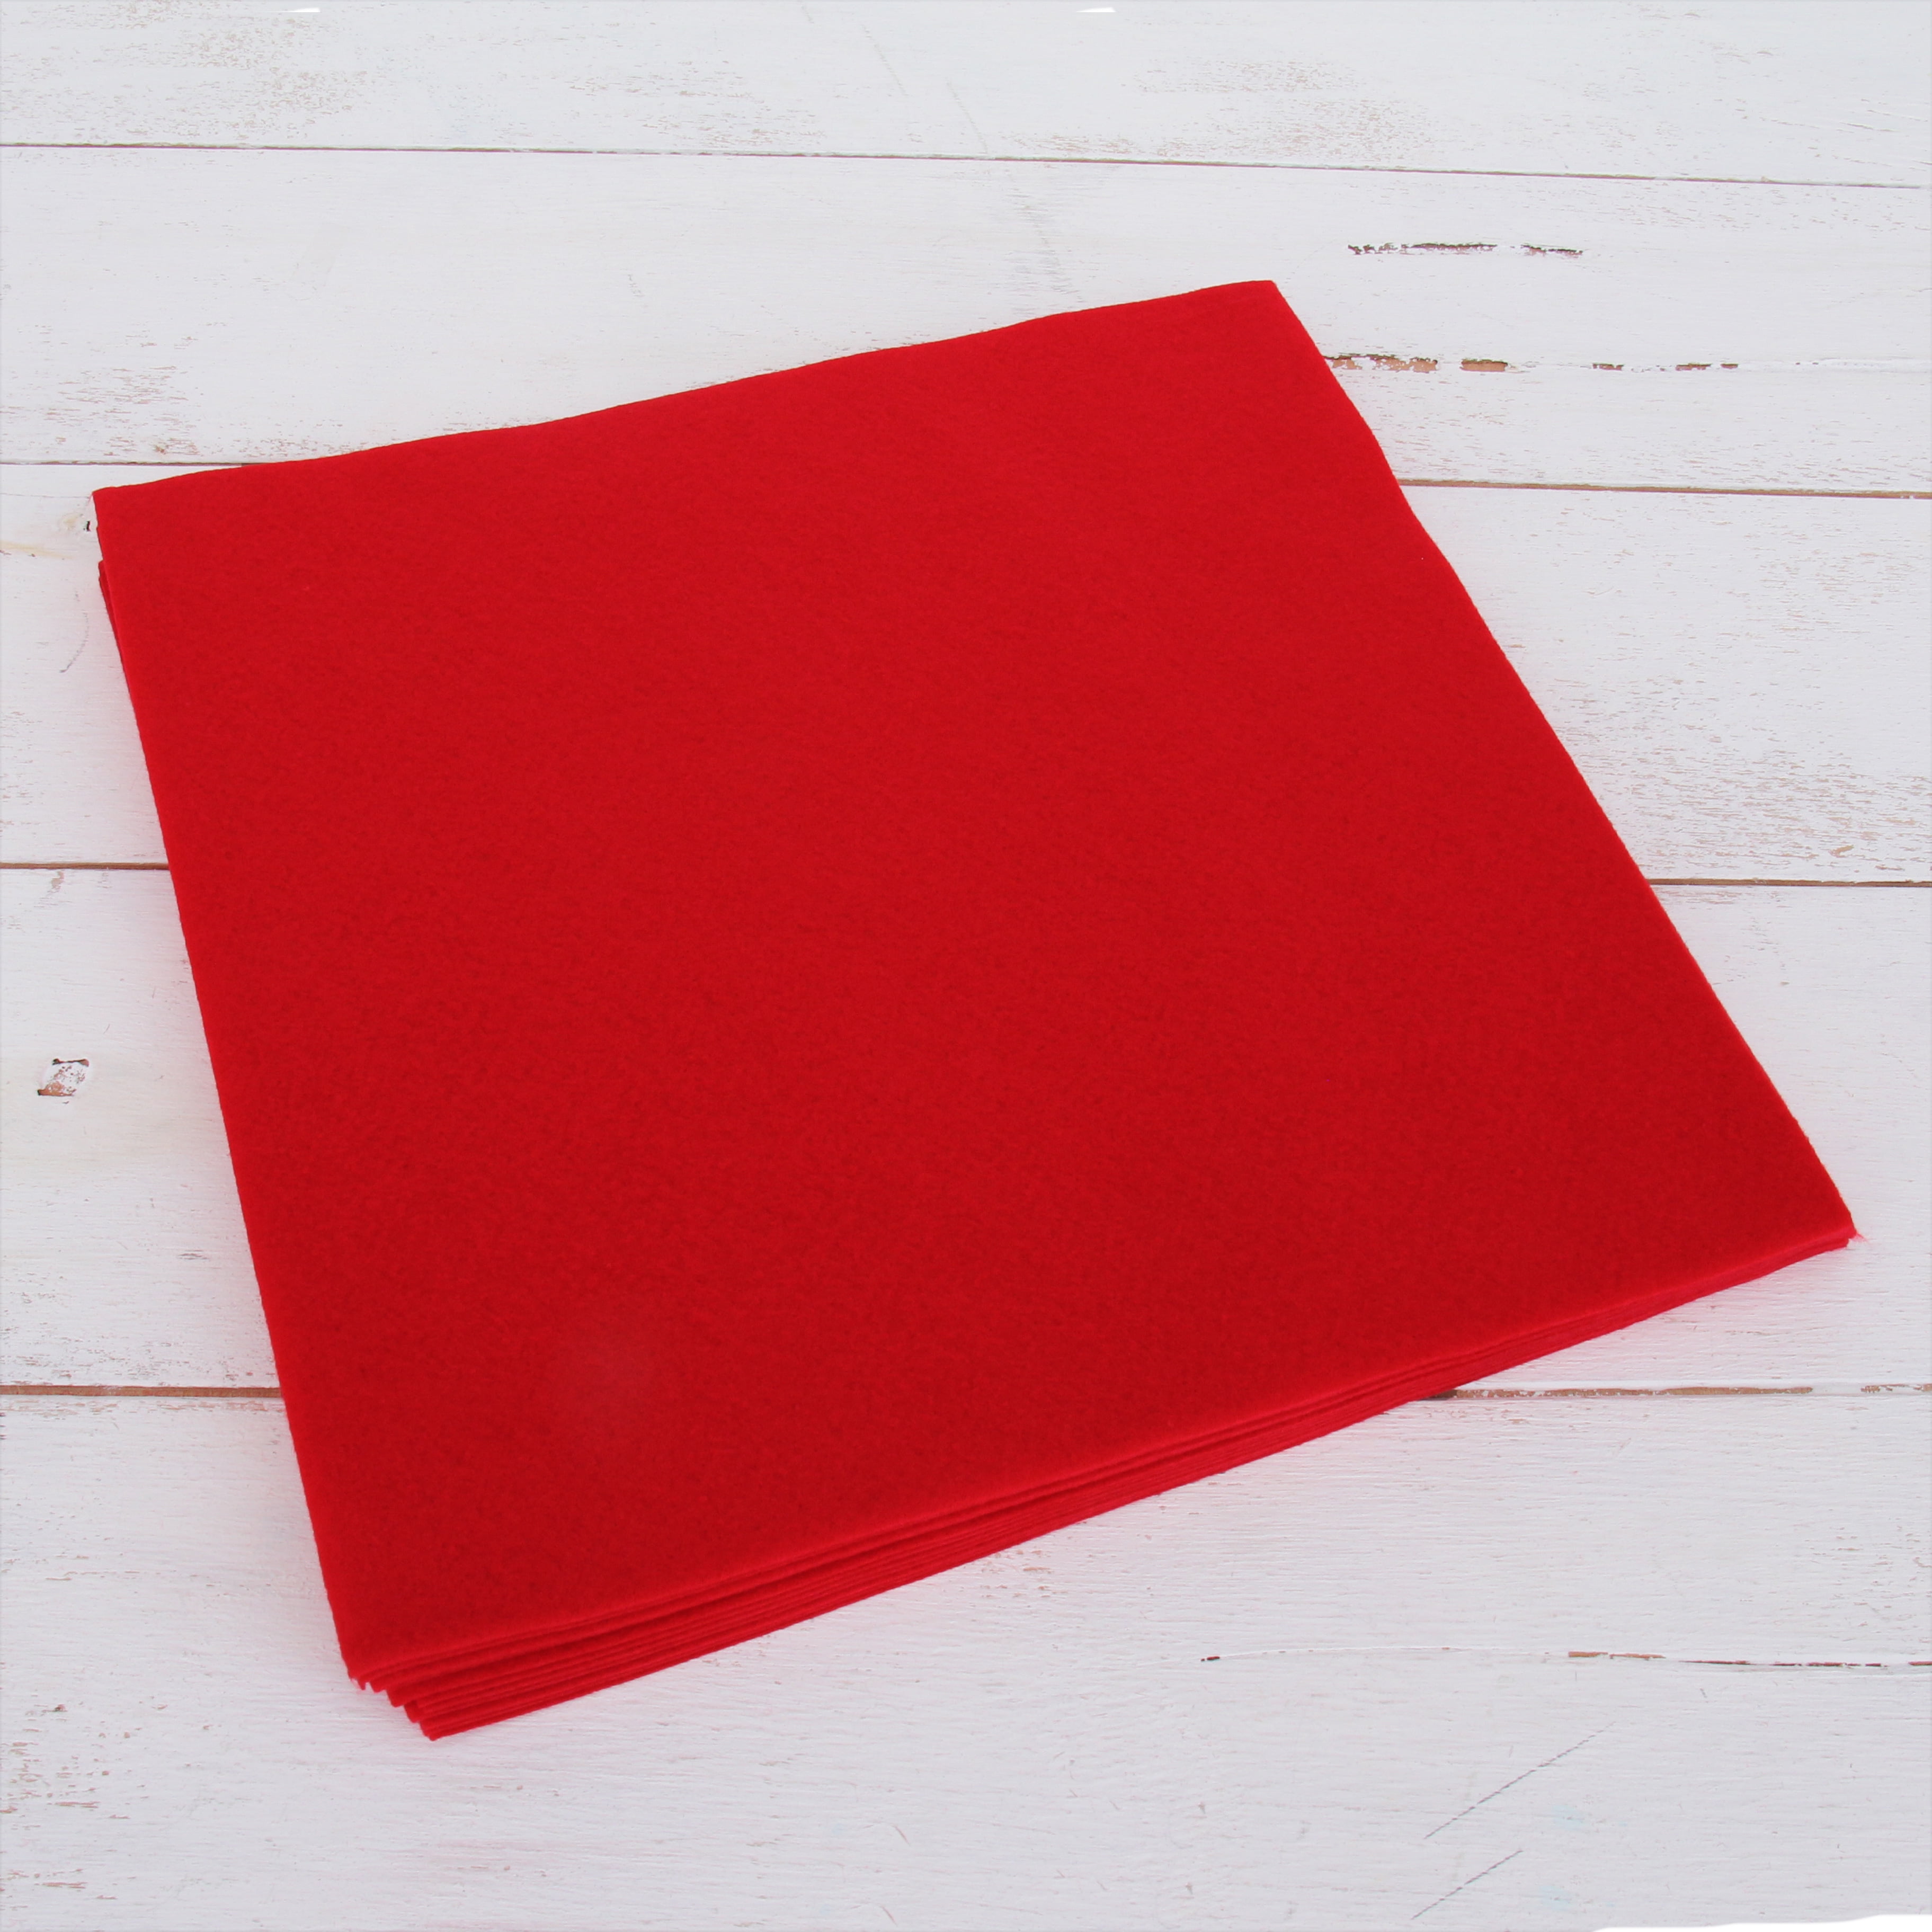 Iooleem Red Felt Sheets, 30pcs 7x11.3(Close to A4 Size - 18x28.5 cm) Pre-Cut Felt Sheet for Crafts, Craft Felt Fabric Sheets, Sewing Felt